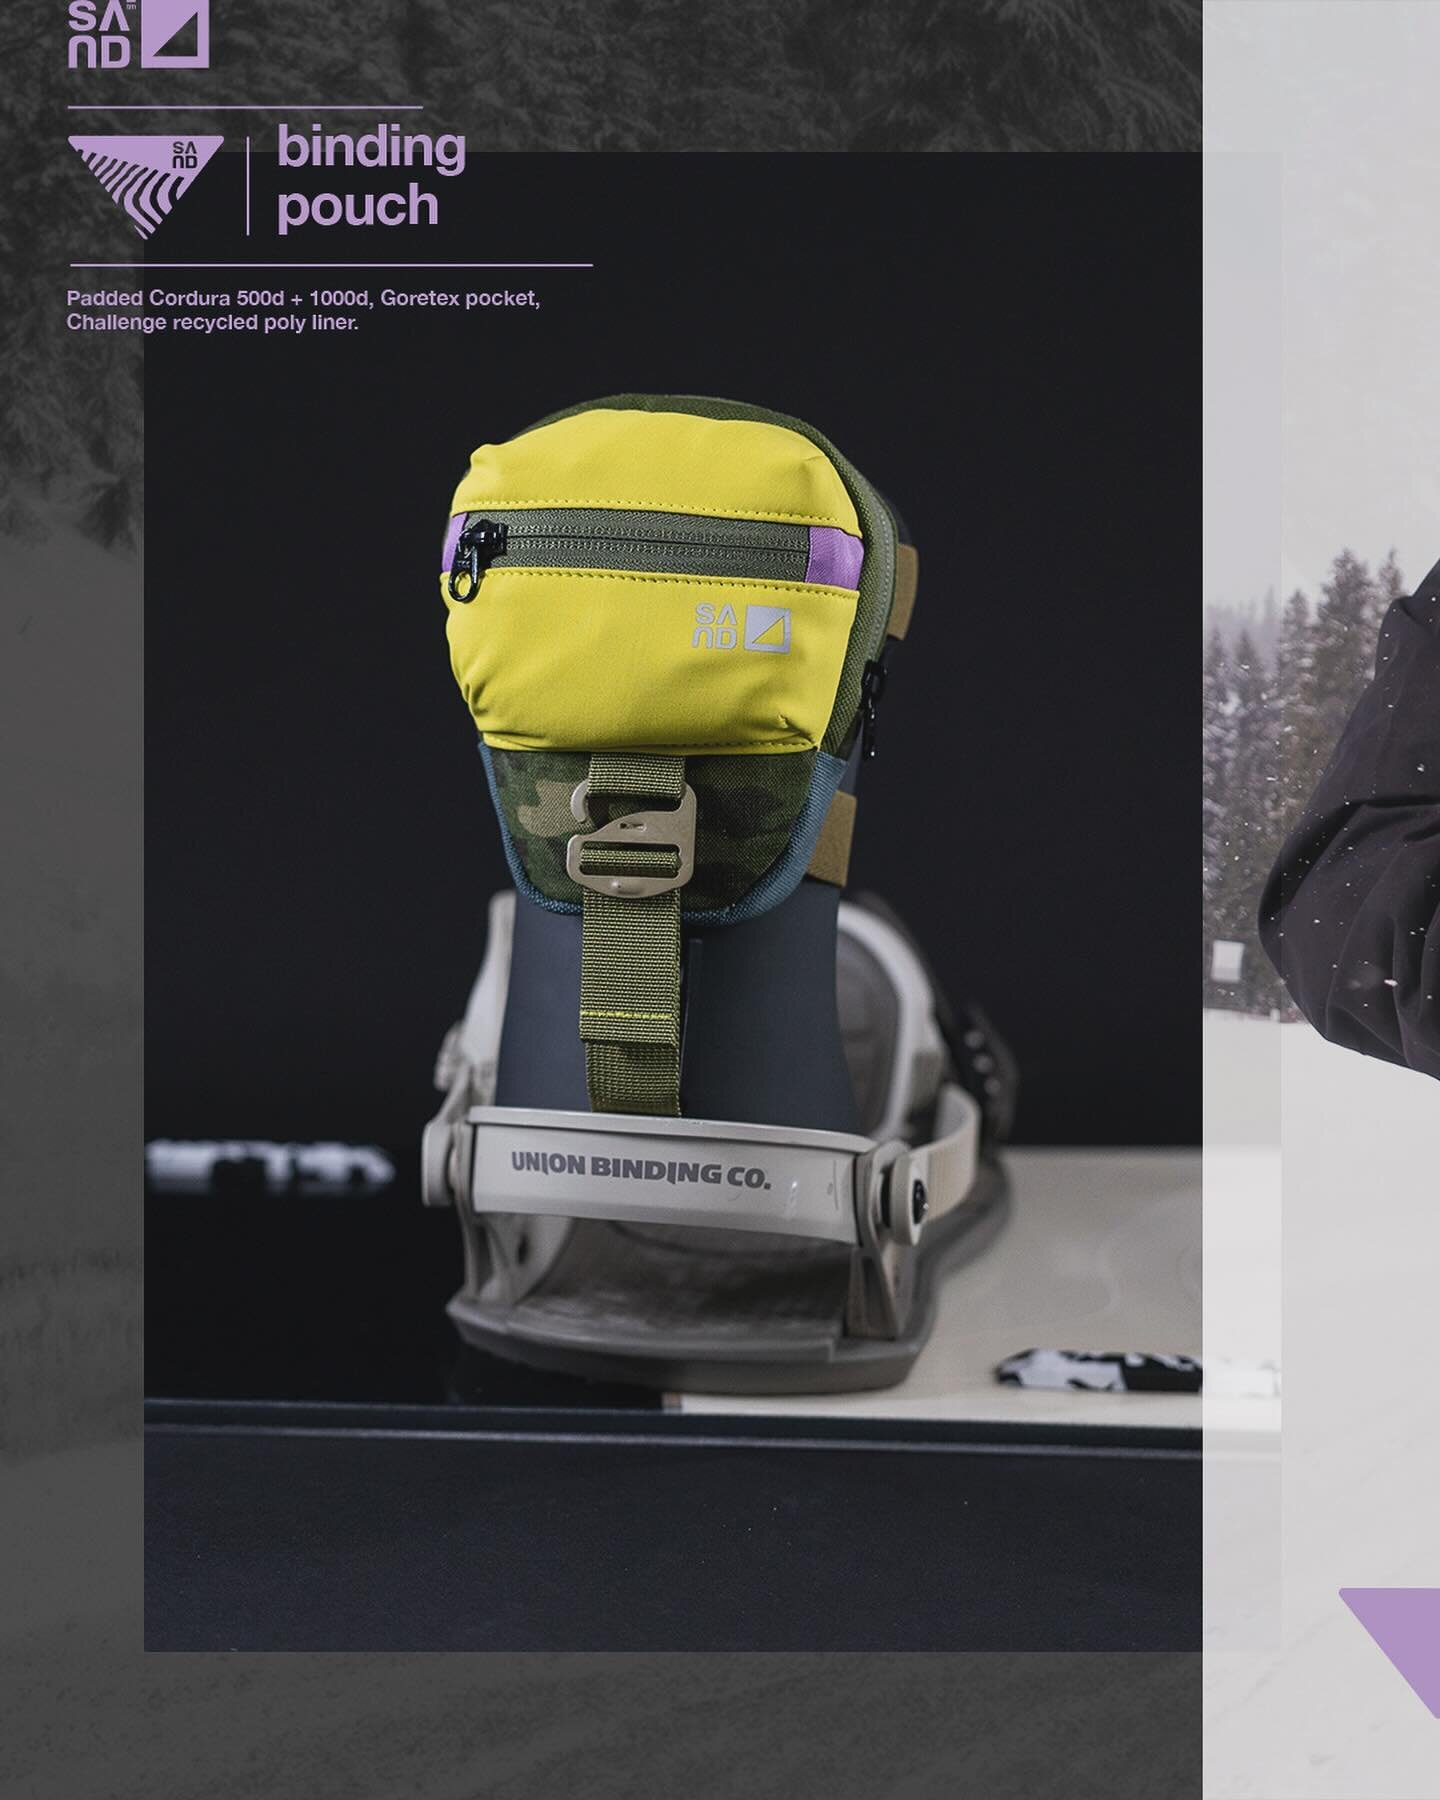 SAND binding pouch. Prototype 1.
.
.
.
#sand #sandisacult #snowboarding #bindingpack #bindingpouch